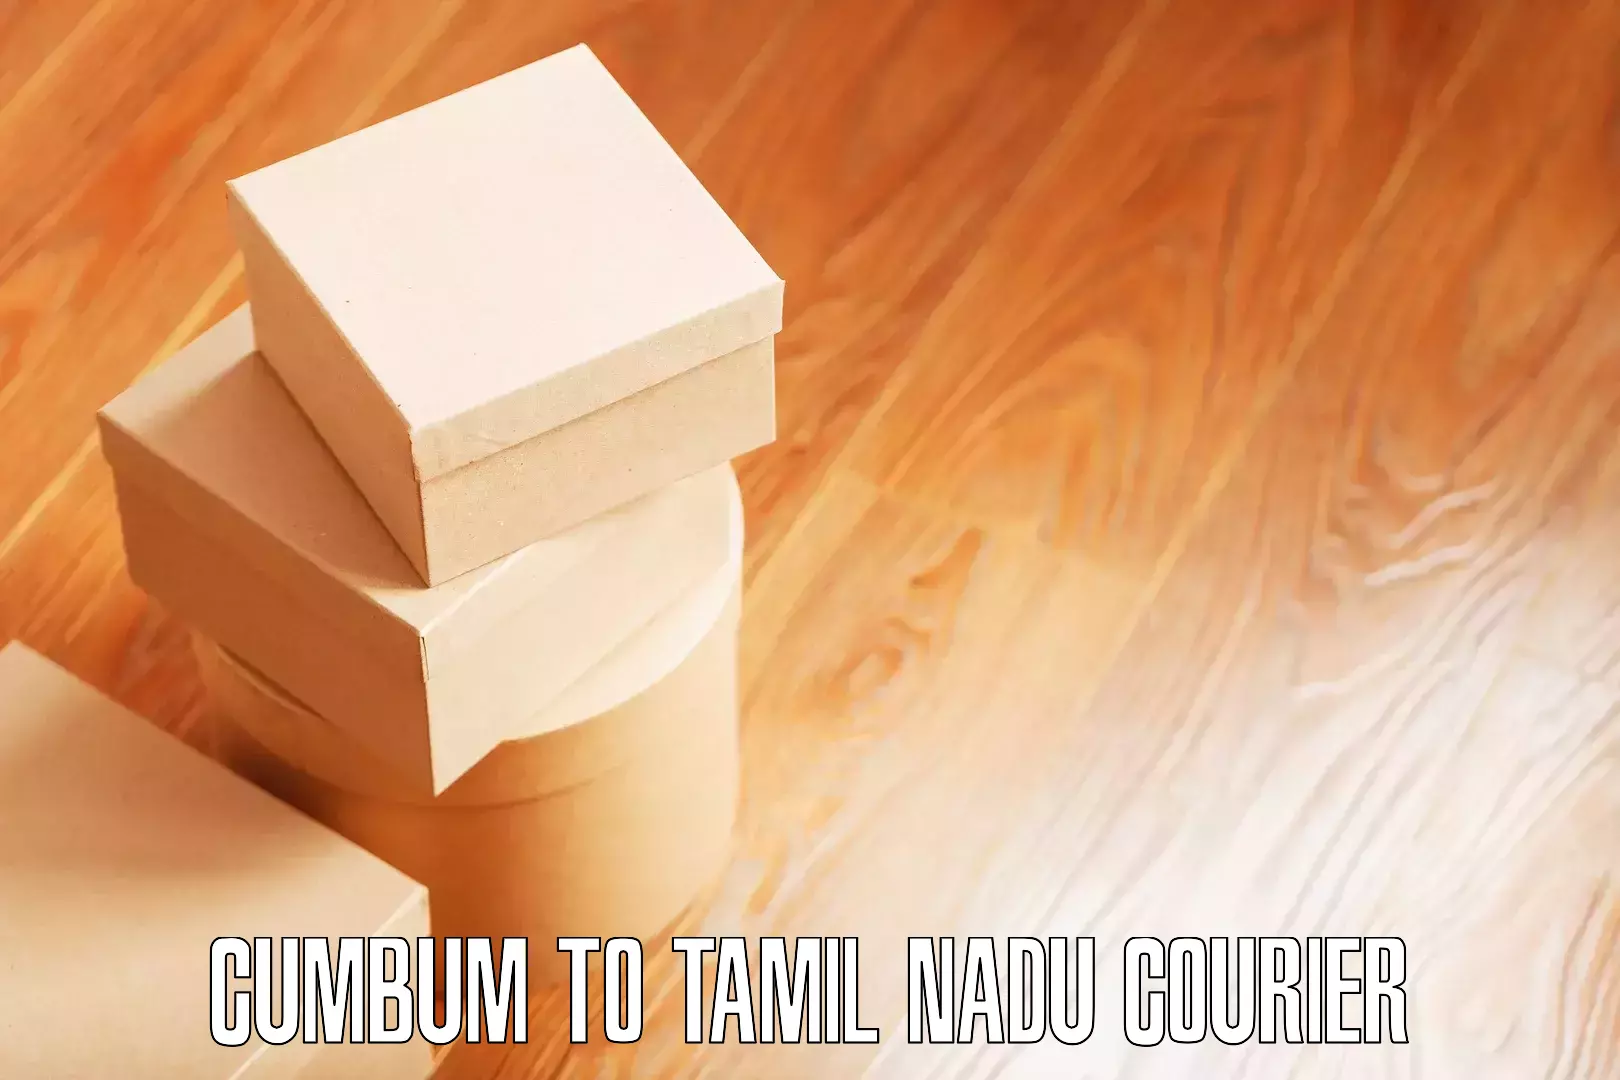 Professional furniture movers Cumbum to Tamil Nadu